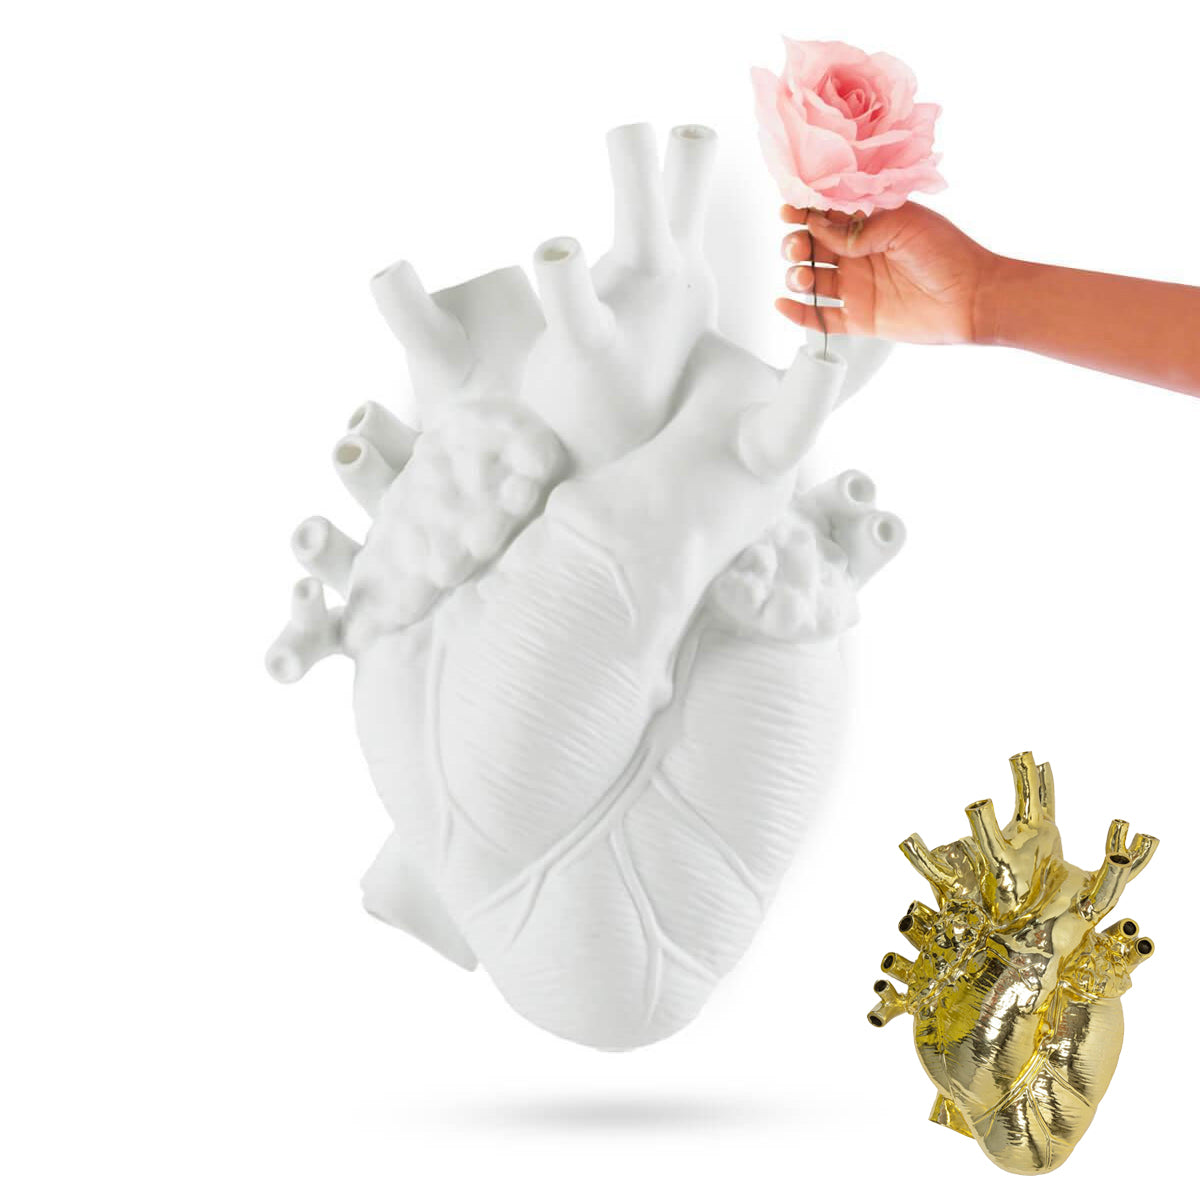 Giant Love in Bloom - Heart Vase